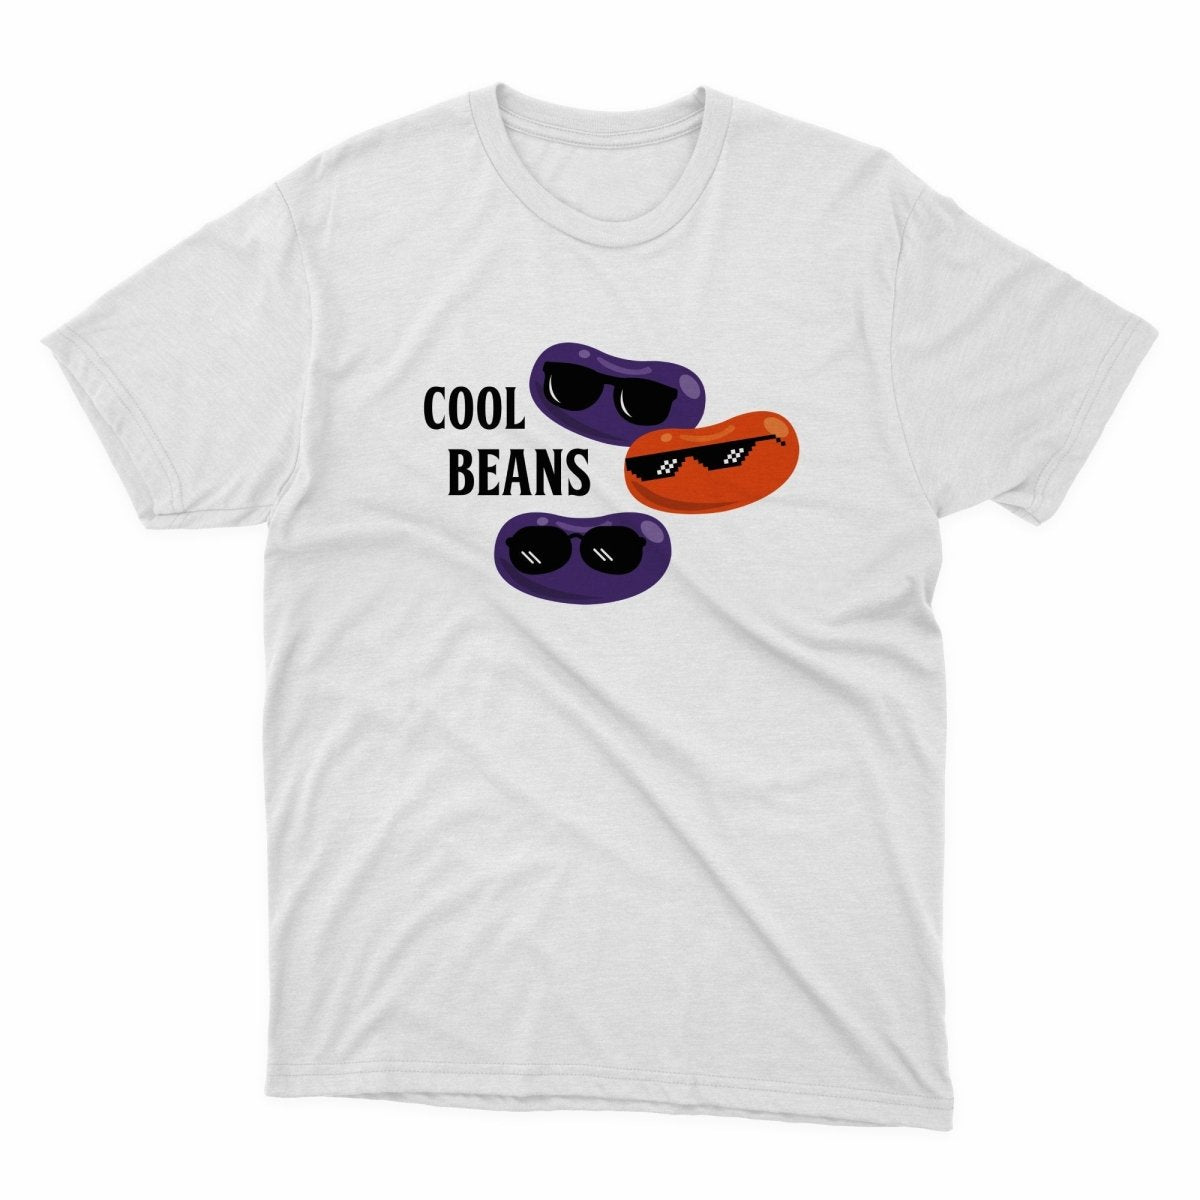 Cool Beans Shirt - stickerbullCool Beans ShirtShirtsPrintifystickerbull34658679721296590217WhiteSa white t - shirt with the words cool beans on it